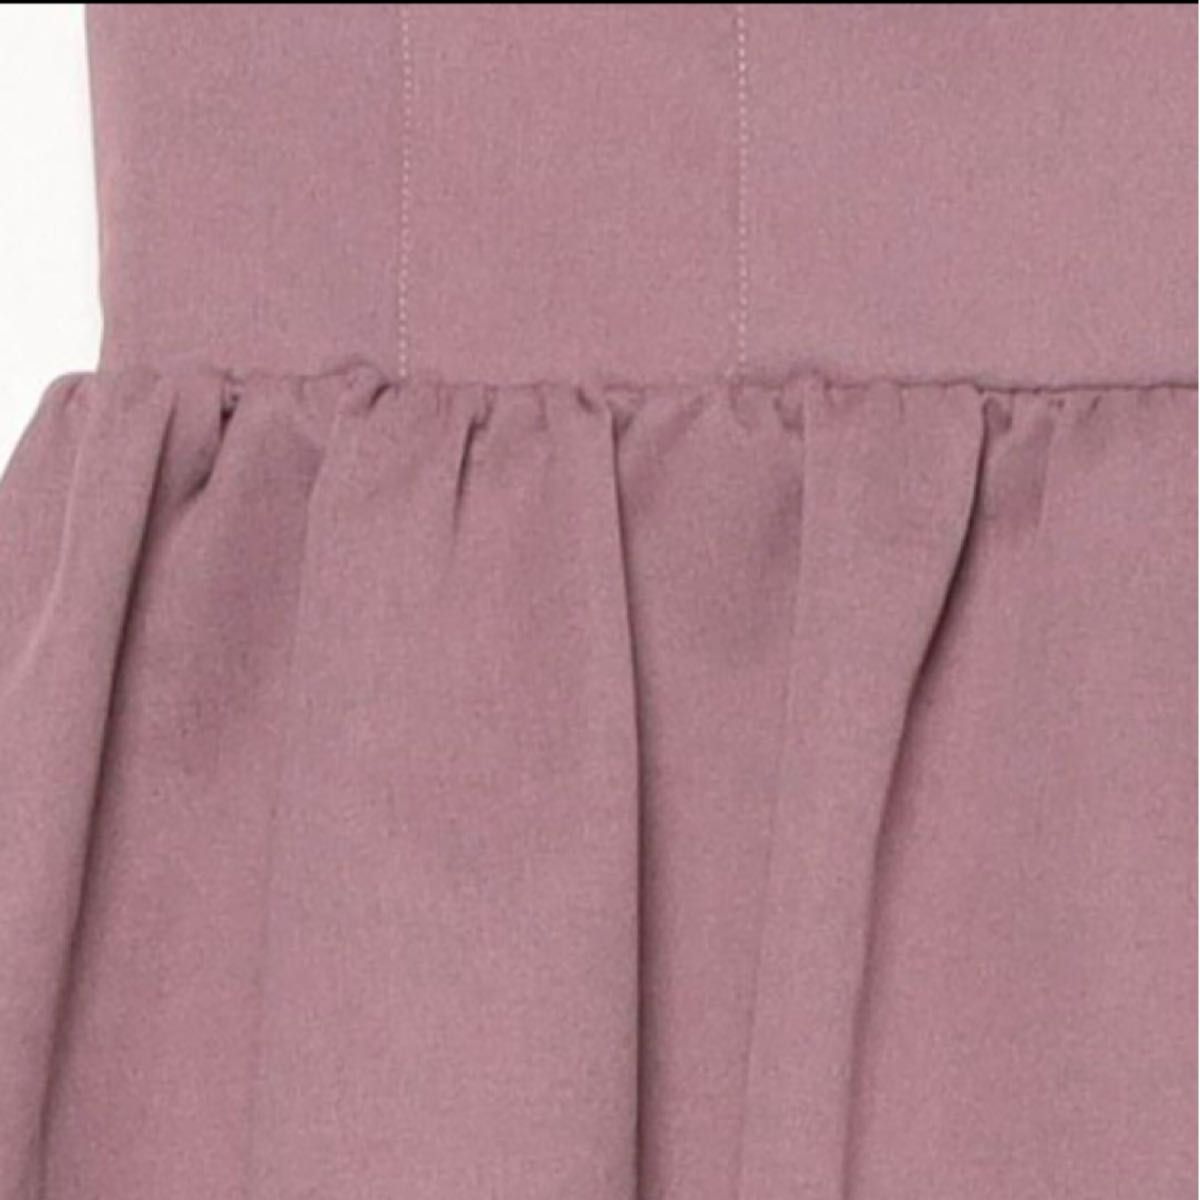 TITTY&CO.  フレア ボリューム スカート ピンク 膝丈 無地 ガーリー 体型カバー